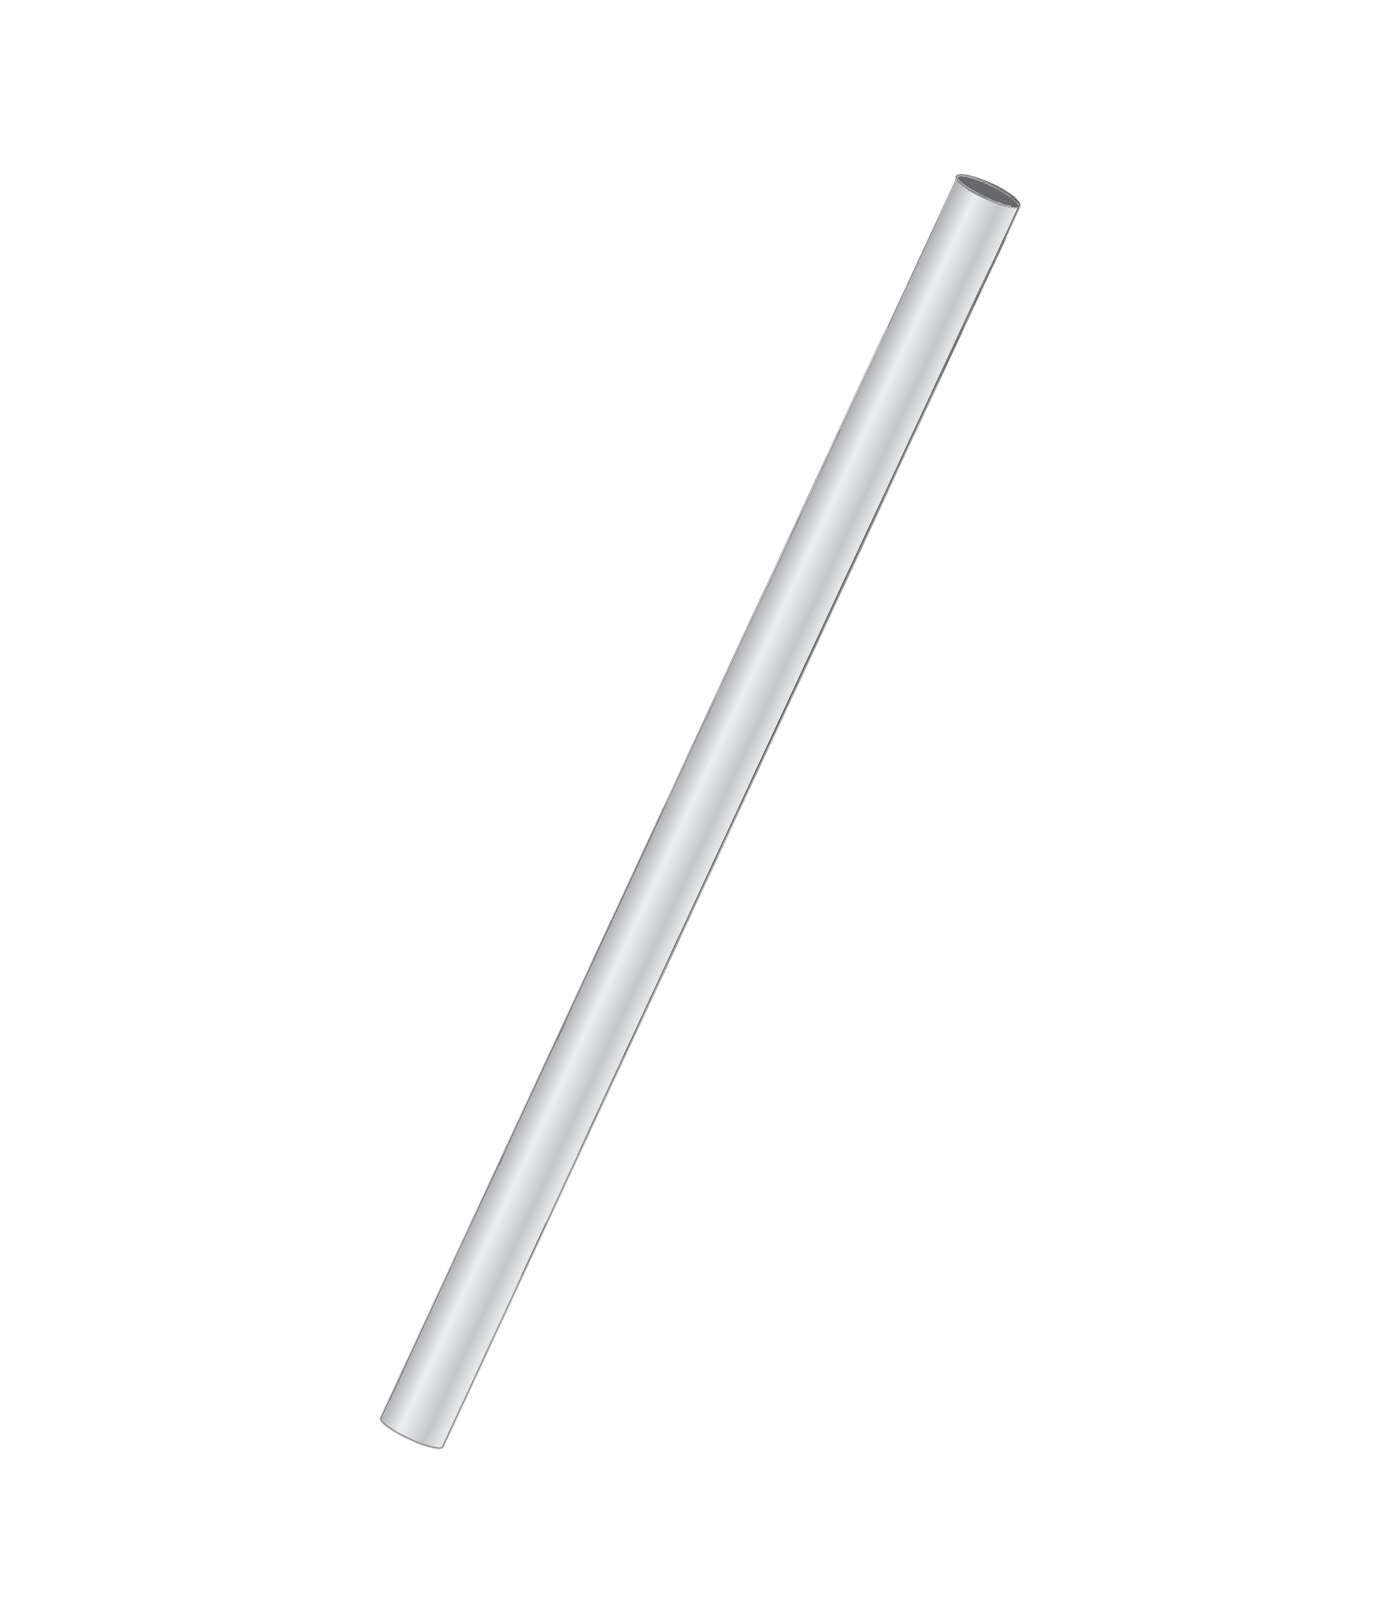  ALU-Steckstange 1.8 m (ø35 mm) 